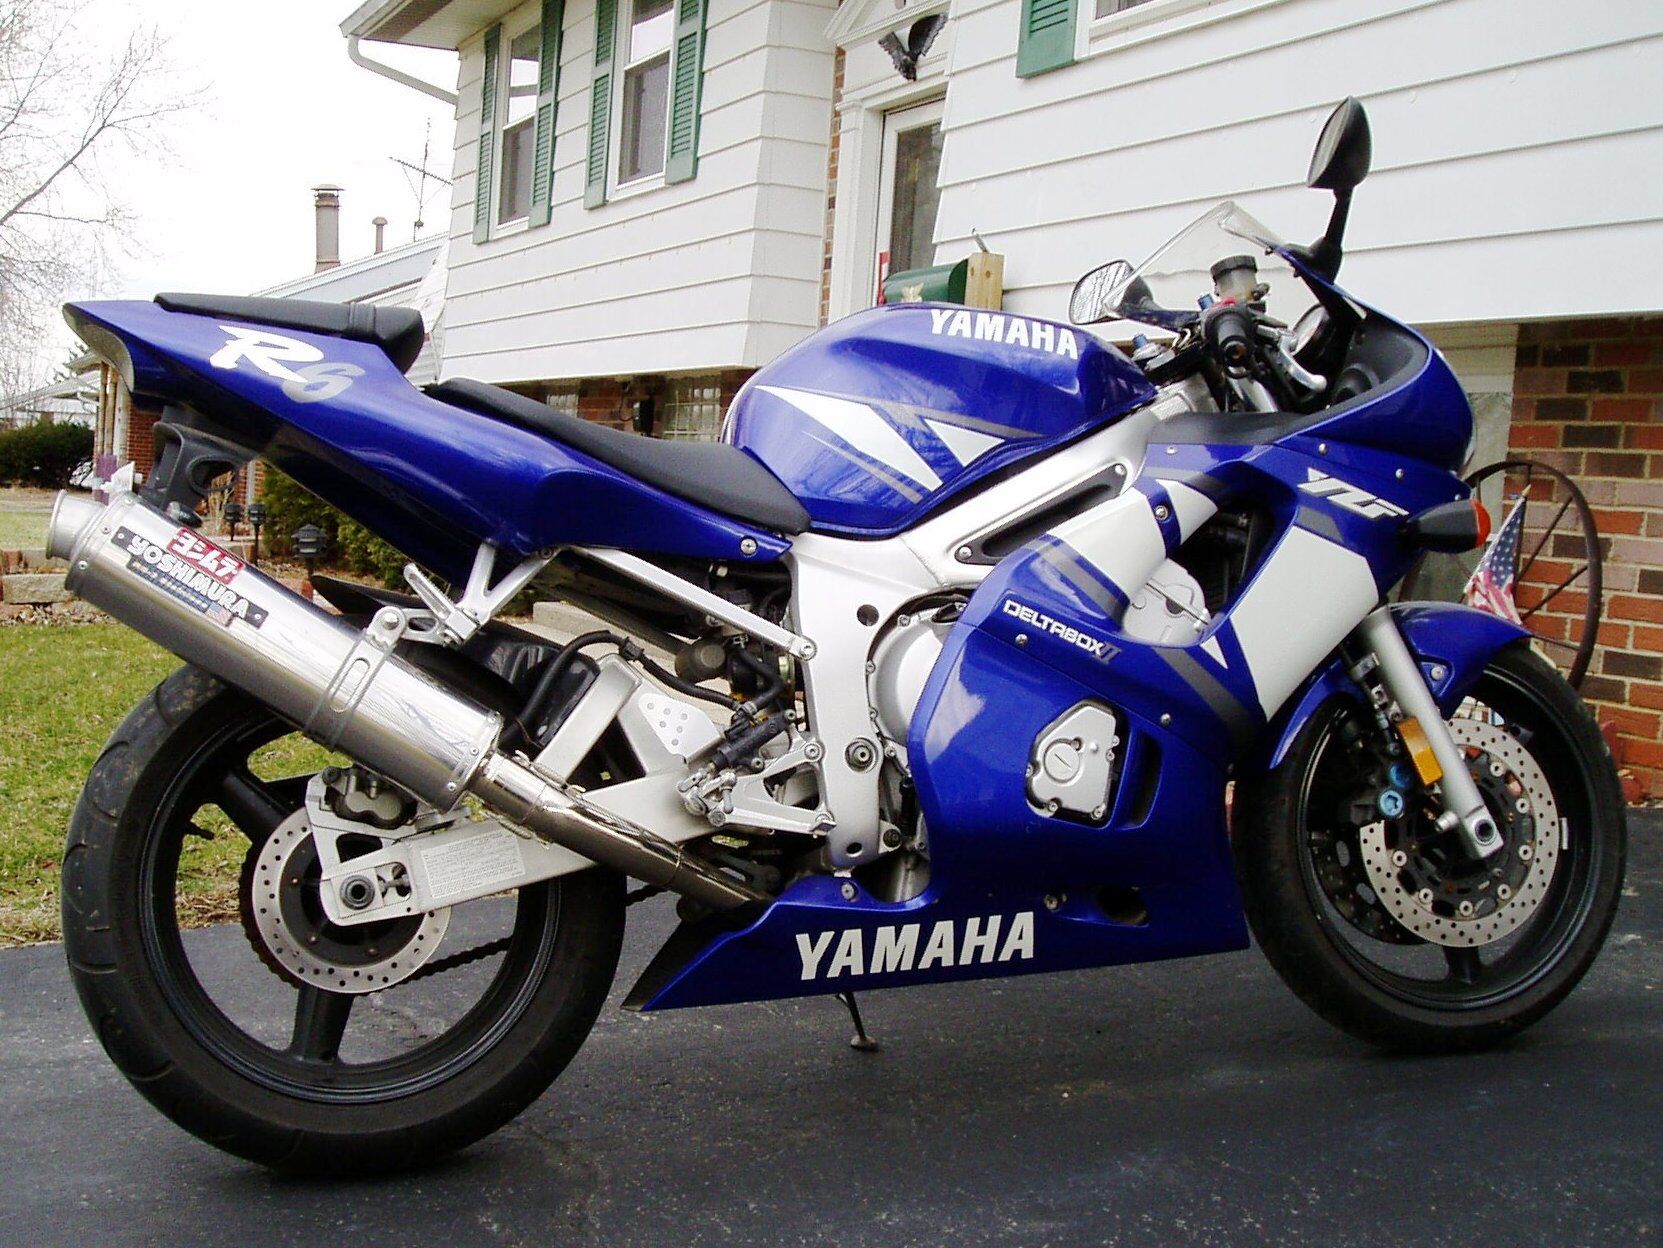 Ямаха 2001 года. Ямаха спорт до 700к. Yamaha спорт турист 600. Мотоцикл Ямаха спорт инвентарь. Вираж, мотоцикл, Ямаха.